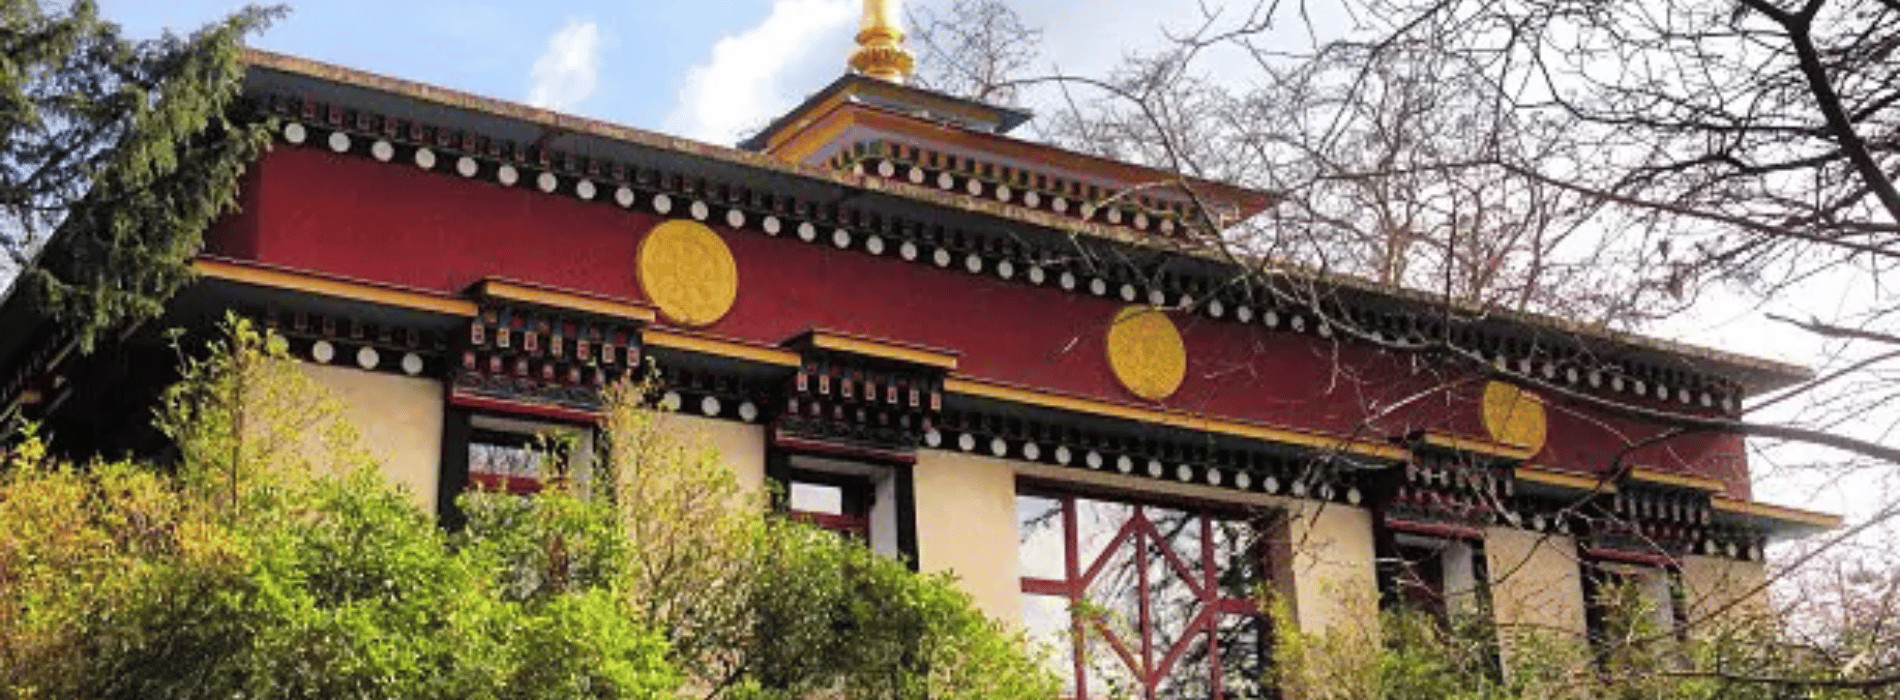 International Buddhist Center PARIS